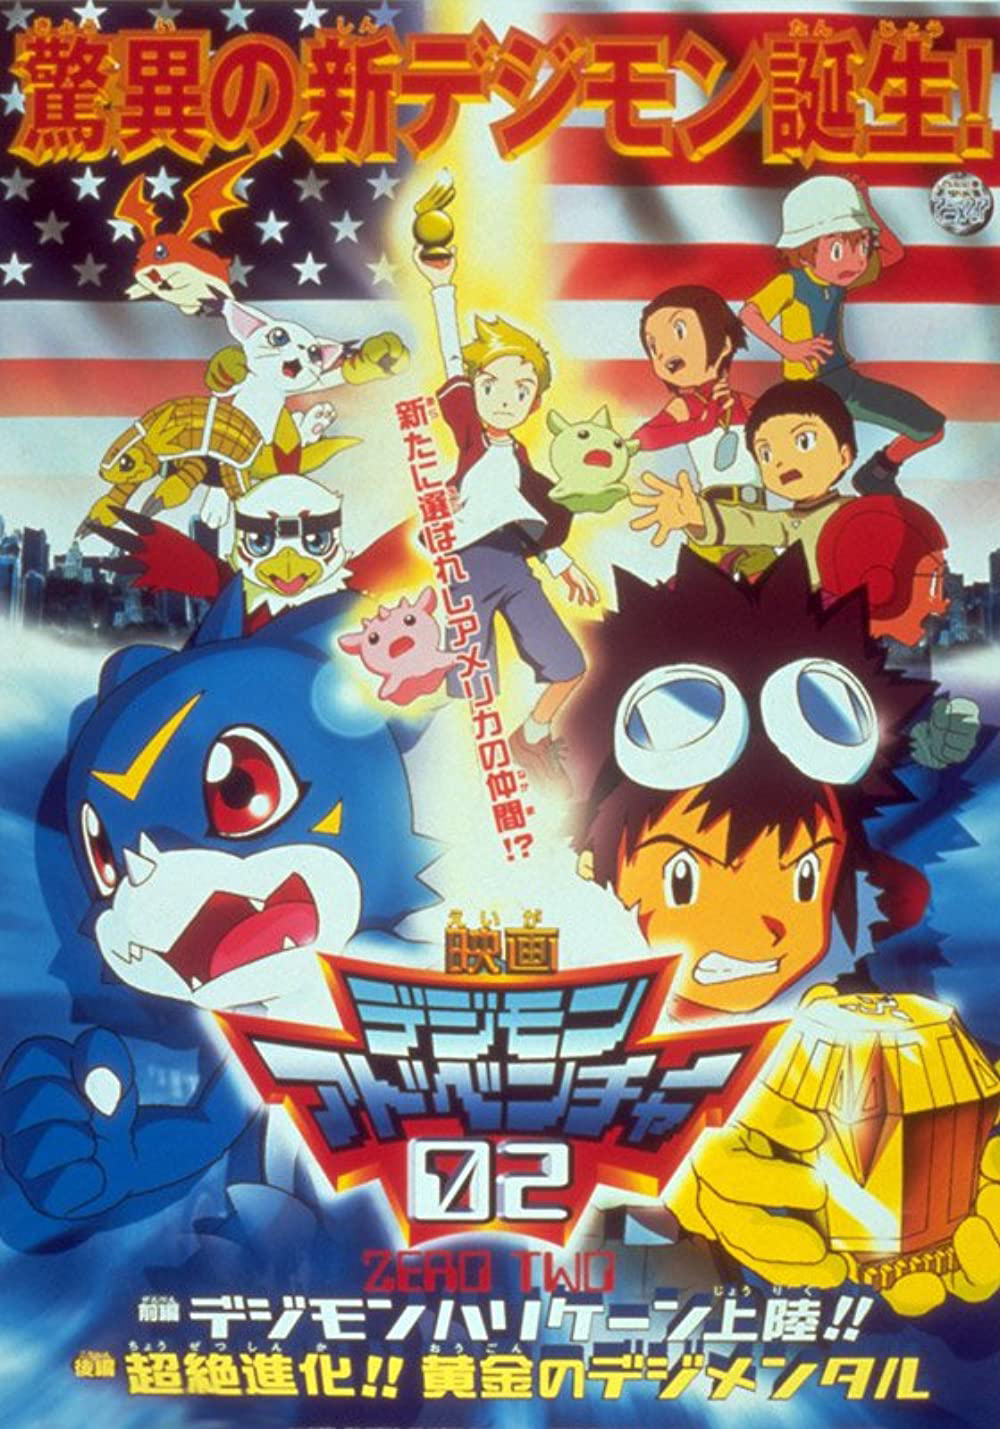 Poster Phim Digimon Adventure 02 - Cơn Bão Digimon Đổ Bộ! Digimental Hoàng Kim! (Digimon Adventure 02 - Hurricane Touchdown! The Golden Digimentals)